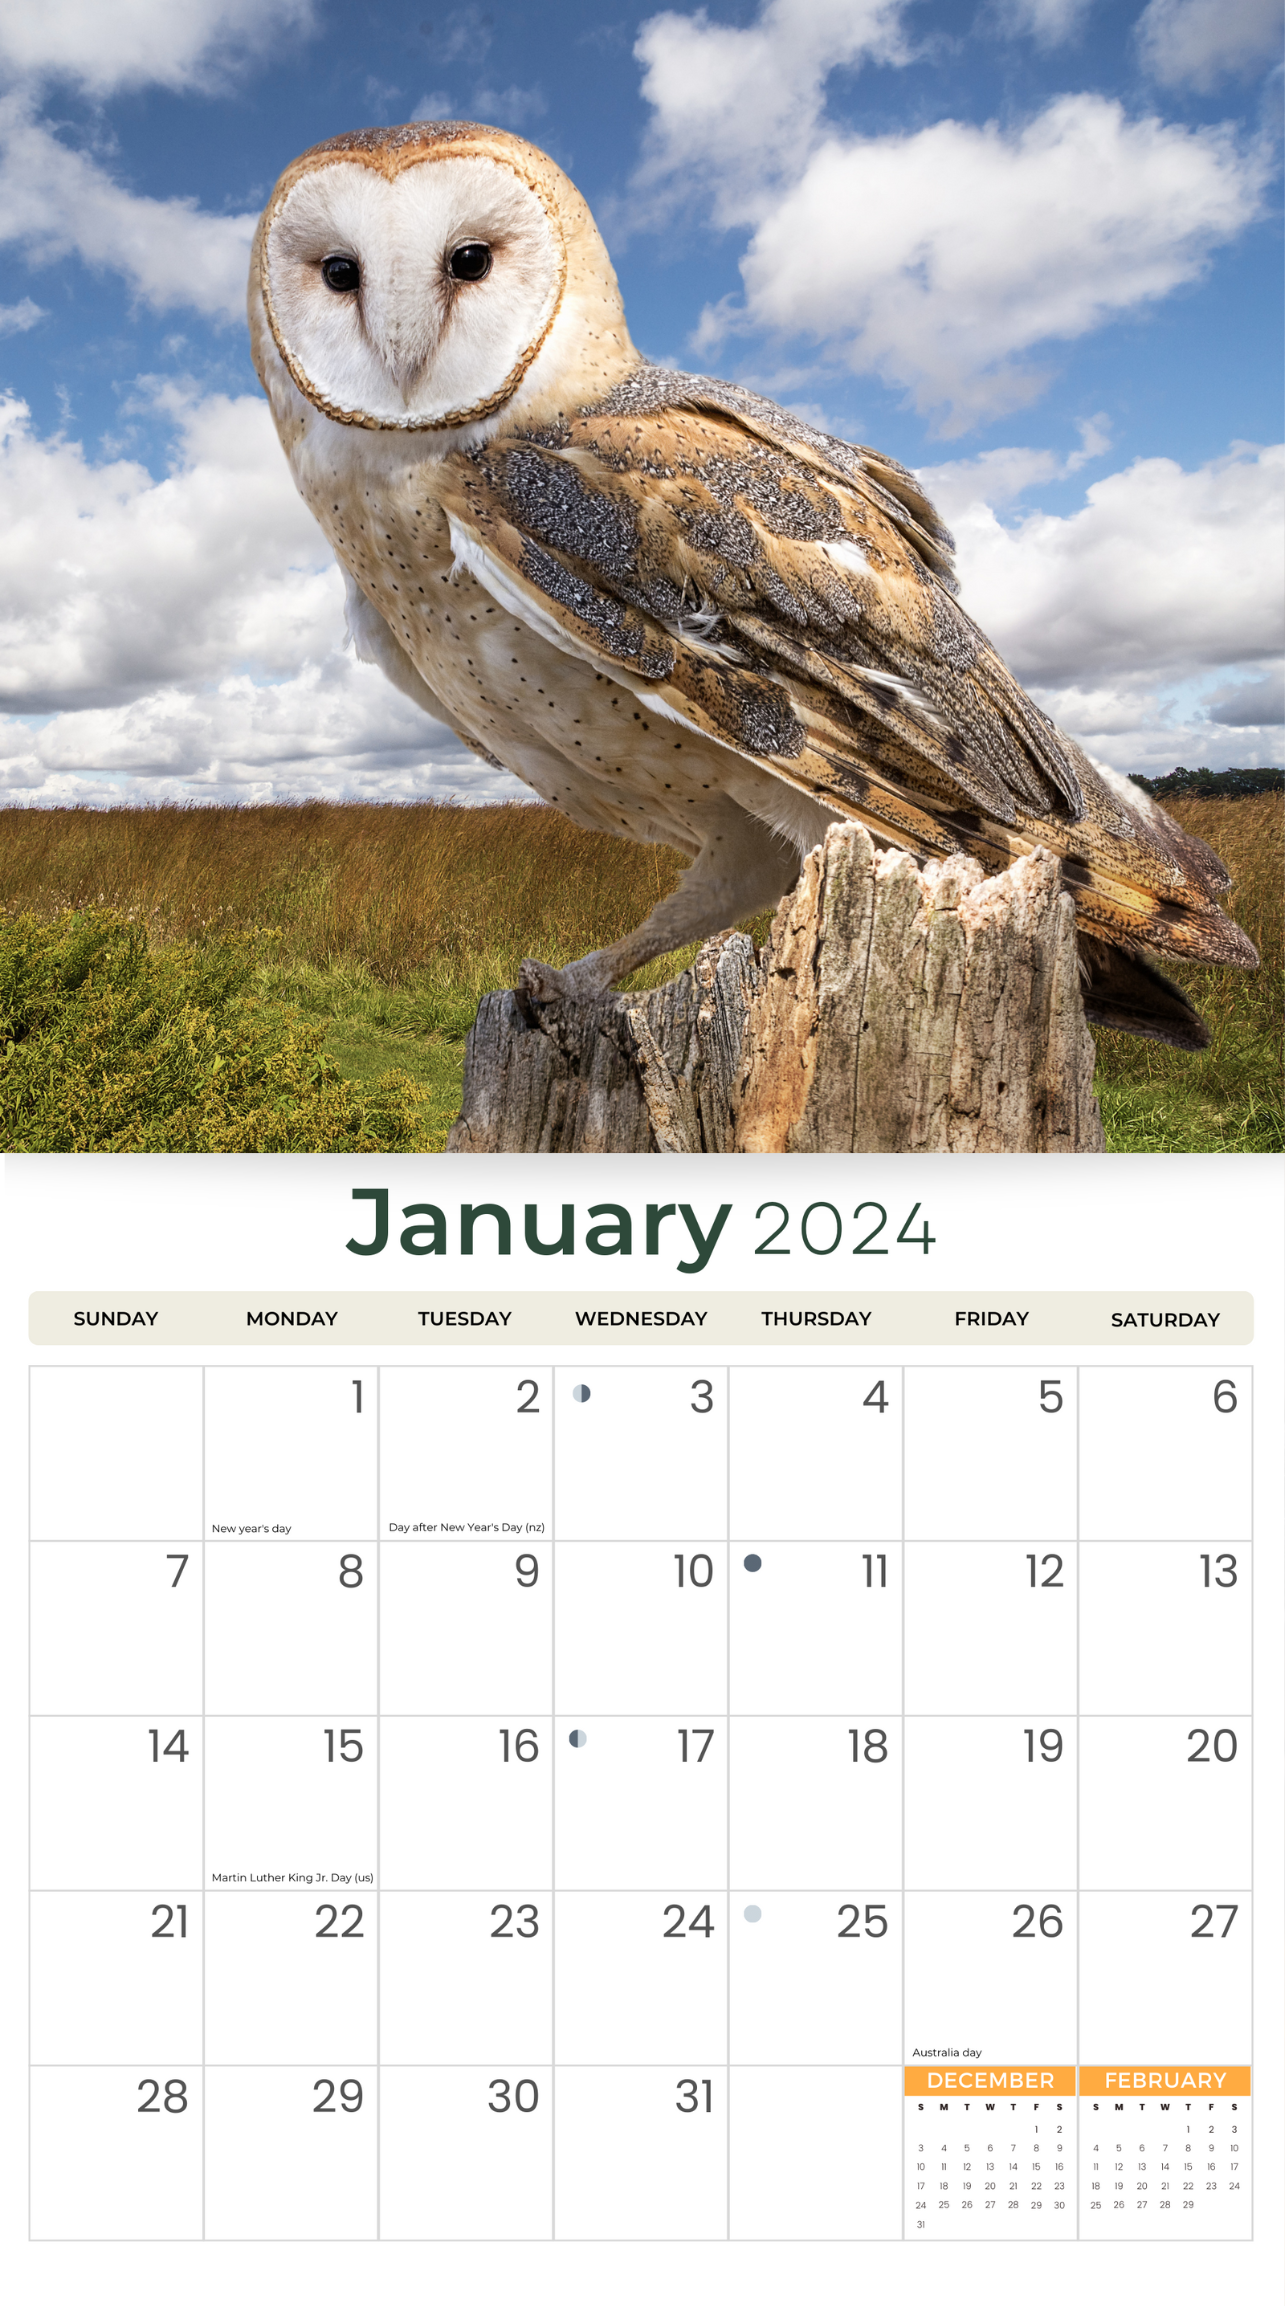 2024 Owls - Deluxe Wall Calendar